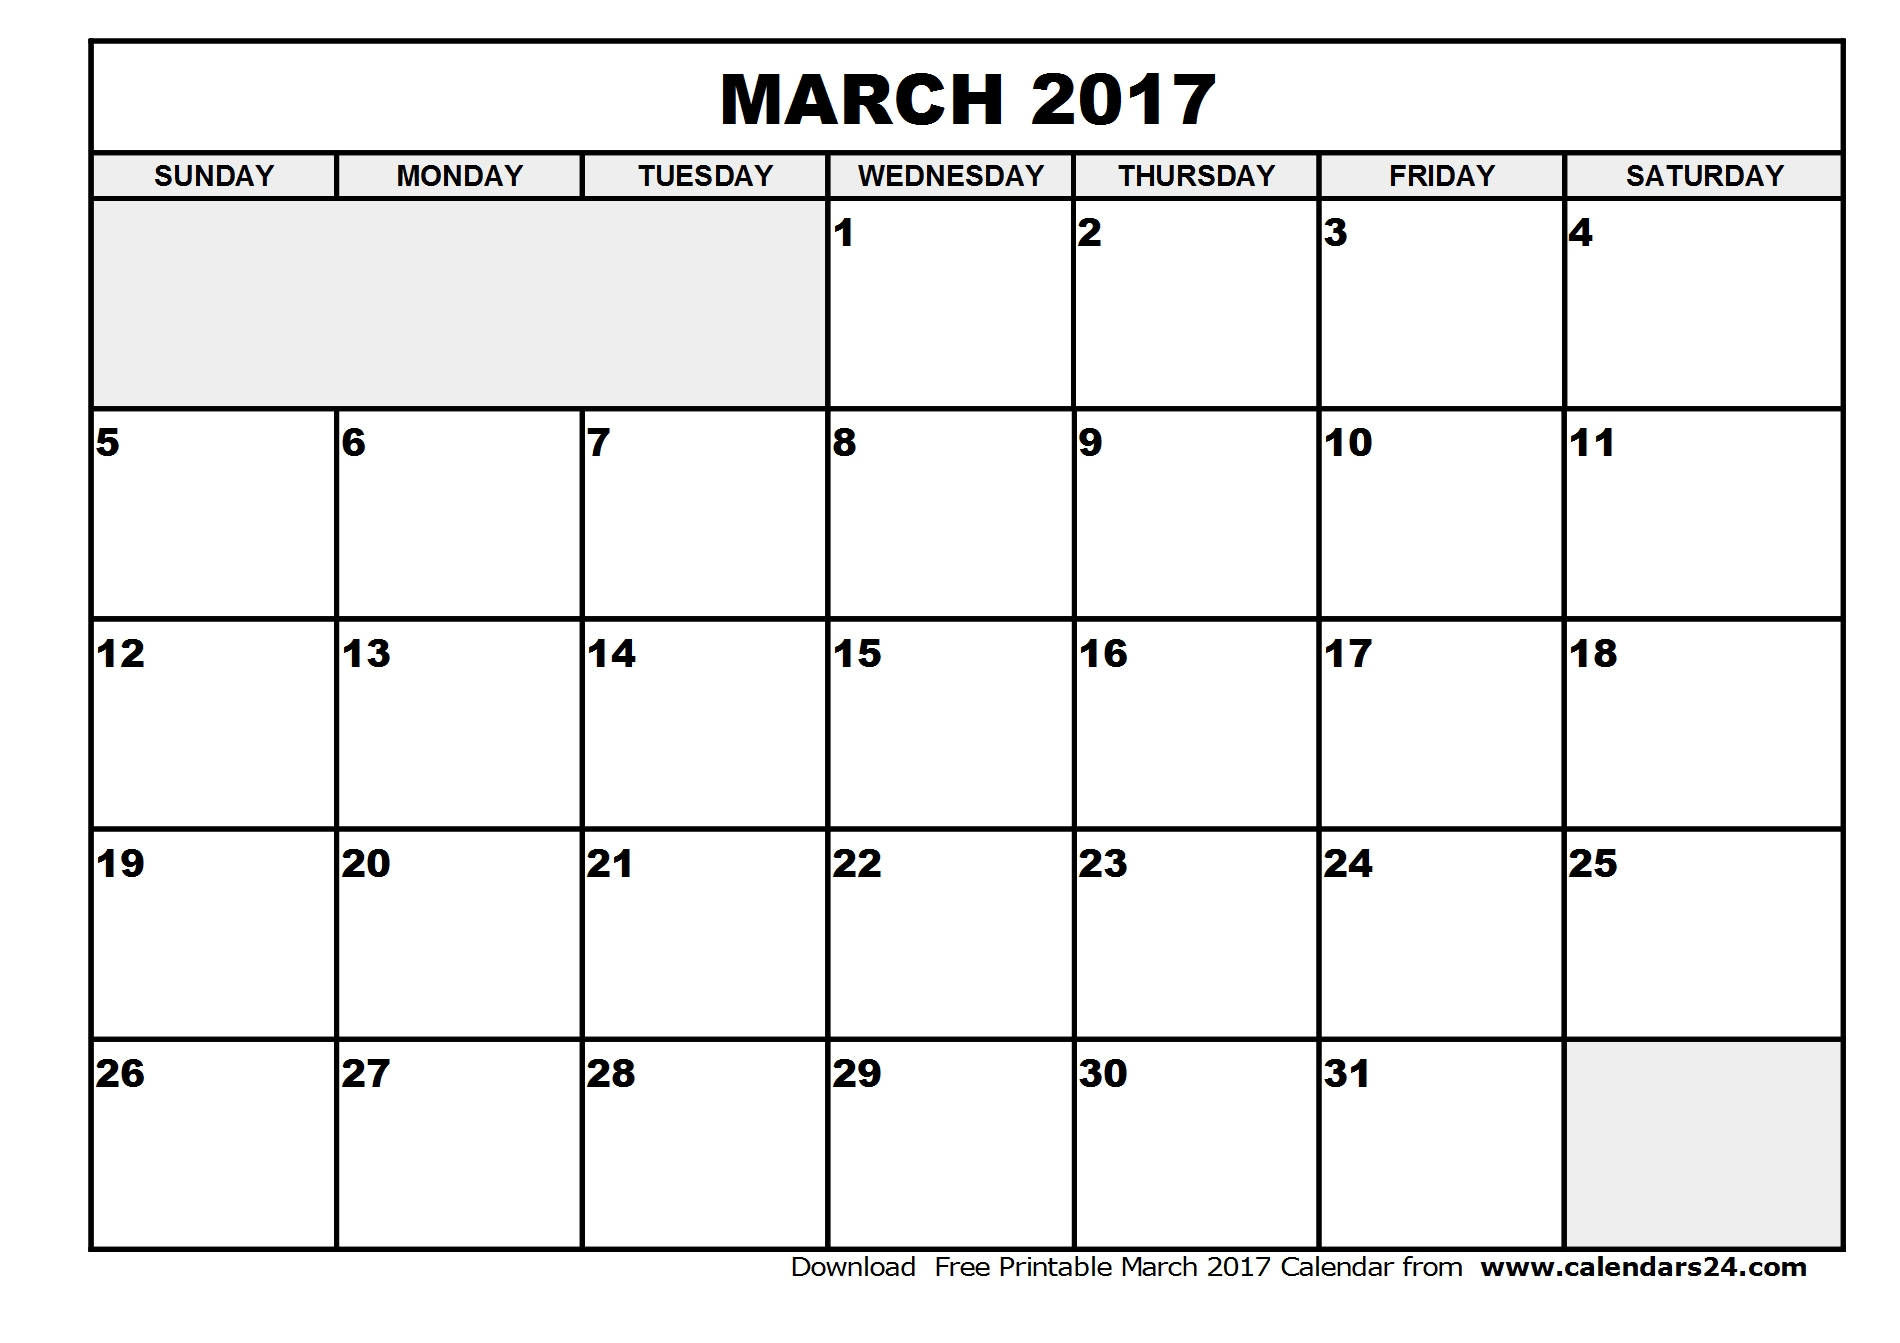 March 2017 Calendar & April 2017 Calendar